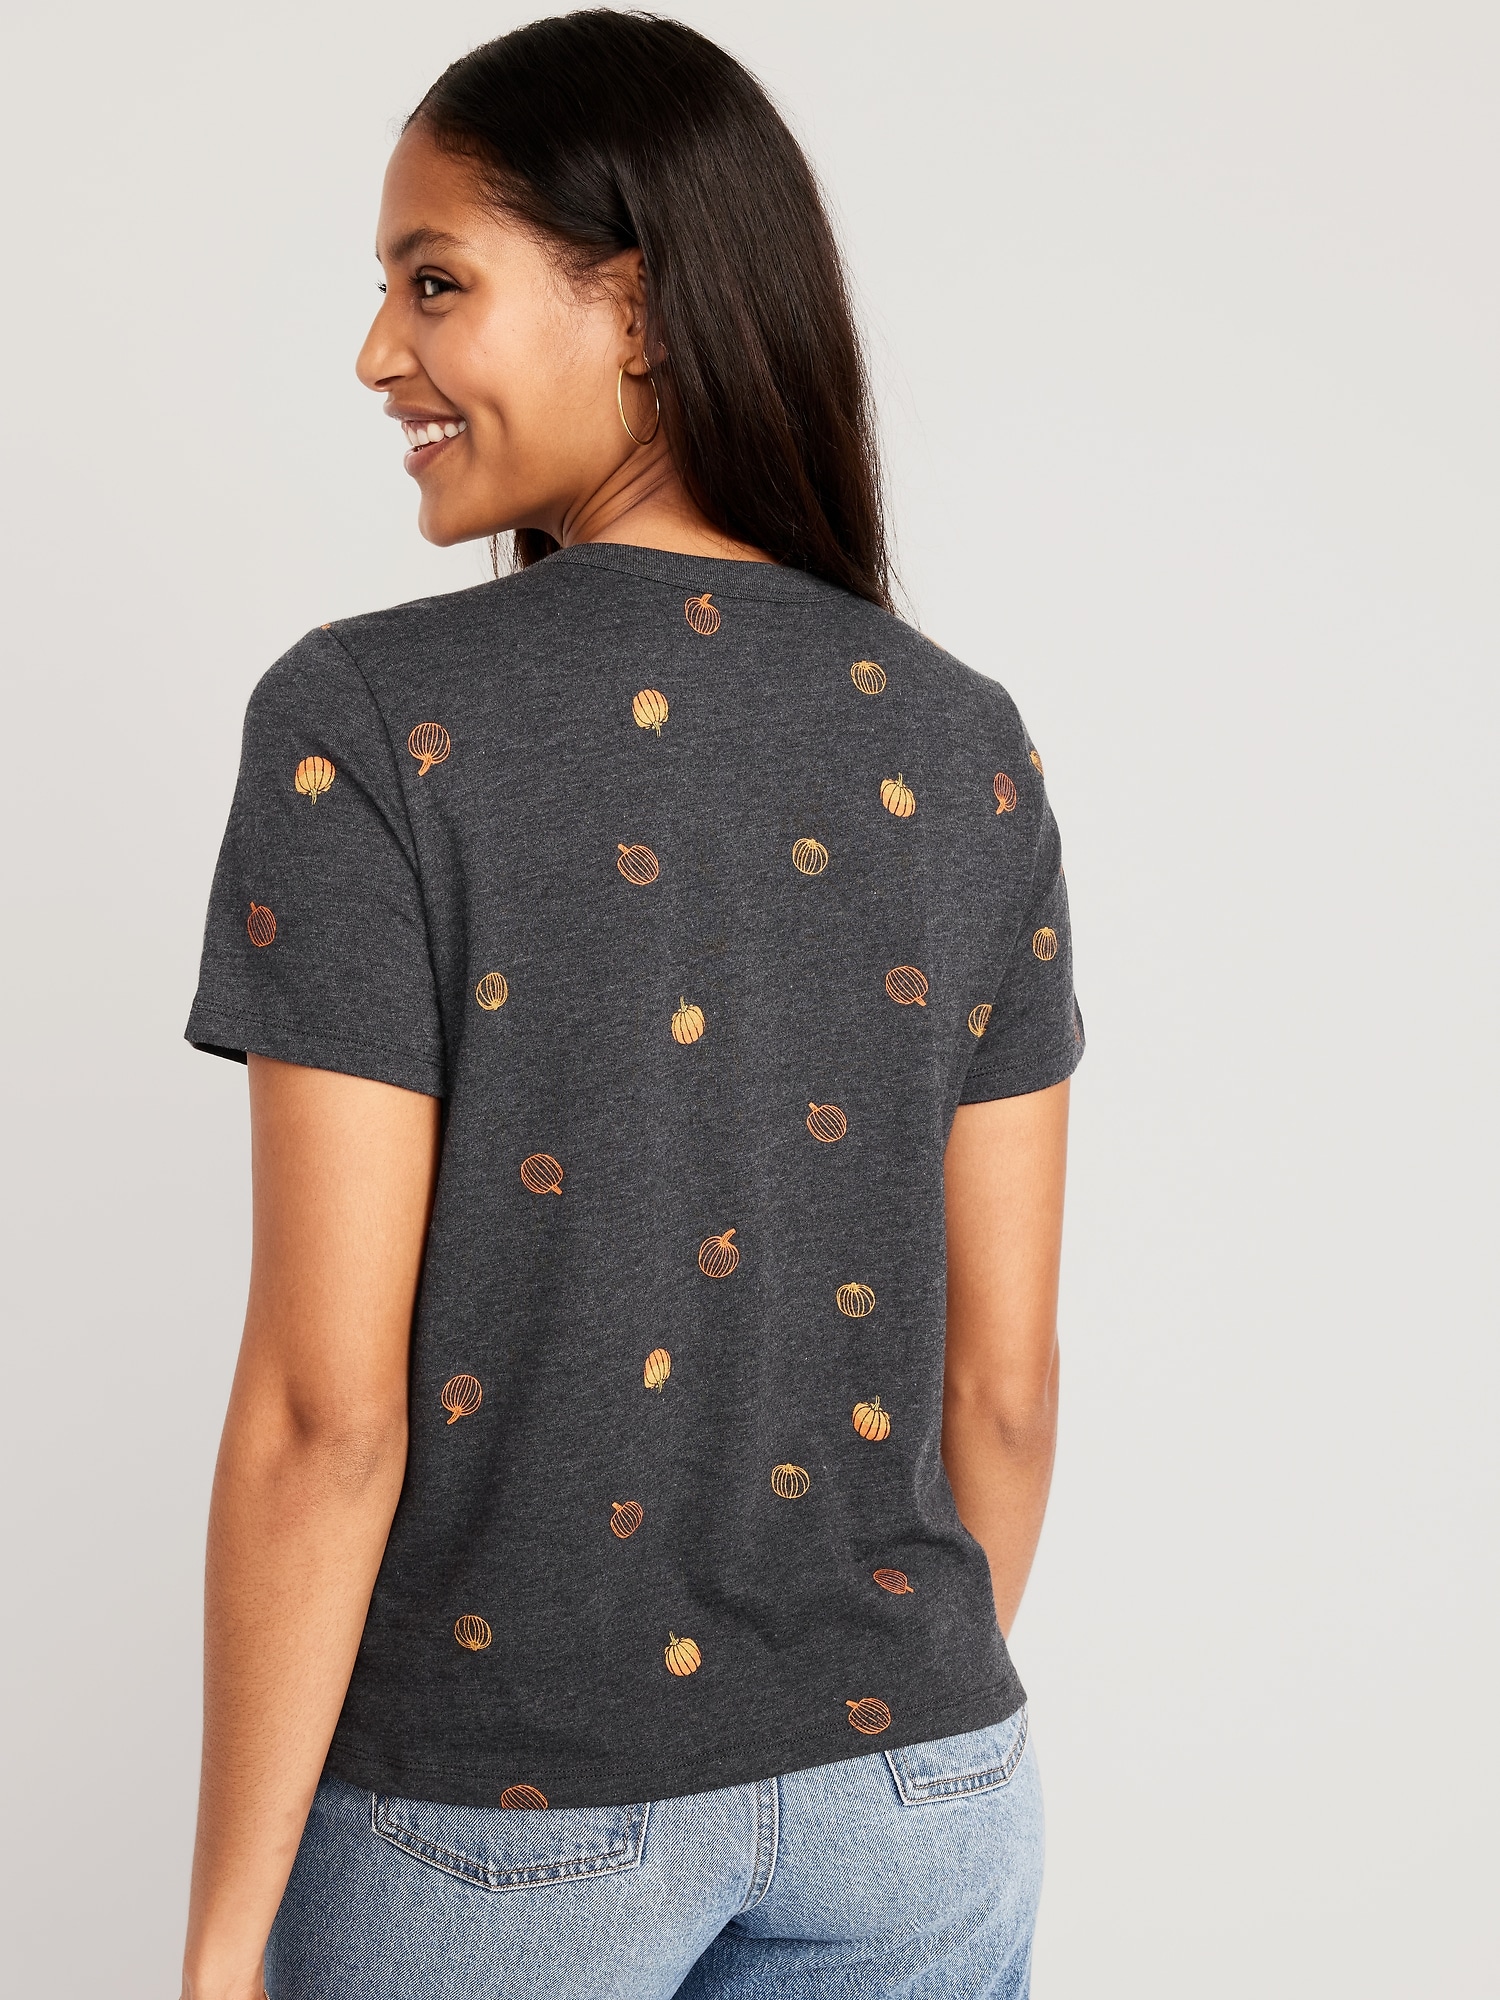 Polka dot printed t - shirt - View all - T - shirts - MAN